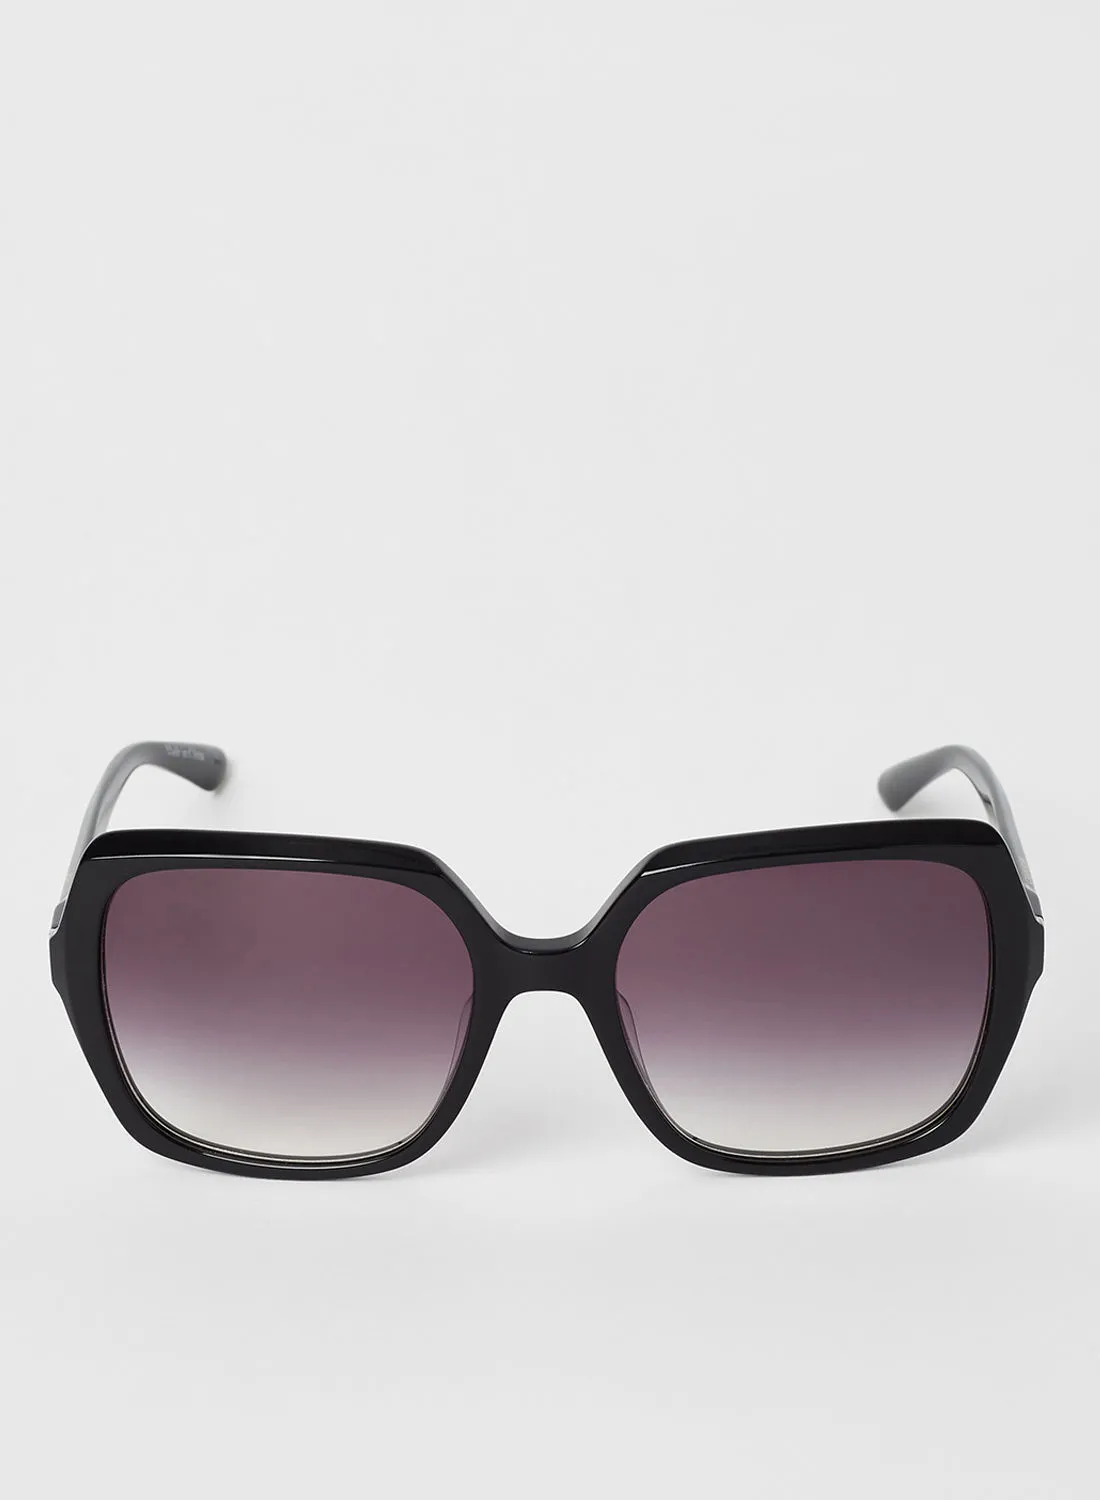 CALVIN KLEIN Women's Full Rim Acetate Square Sunglasses - Lens Size: 57 mm